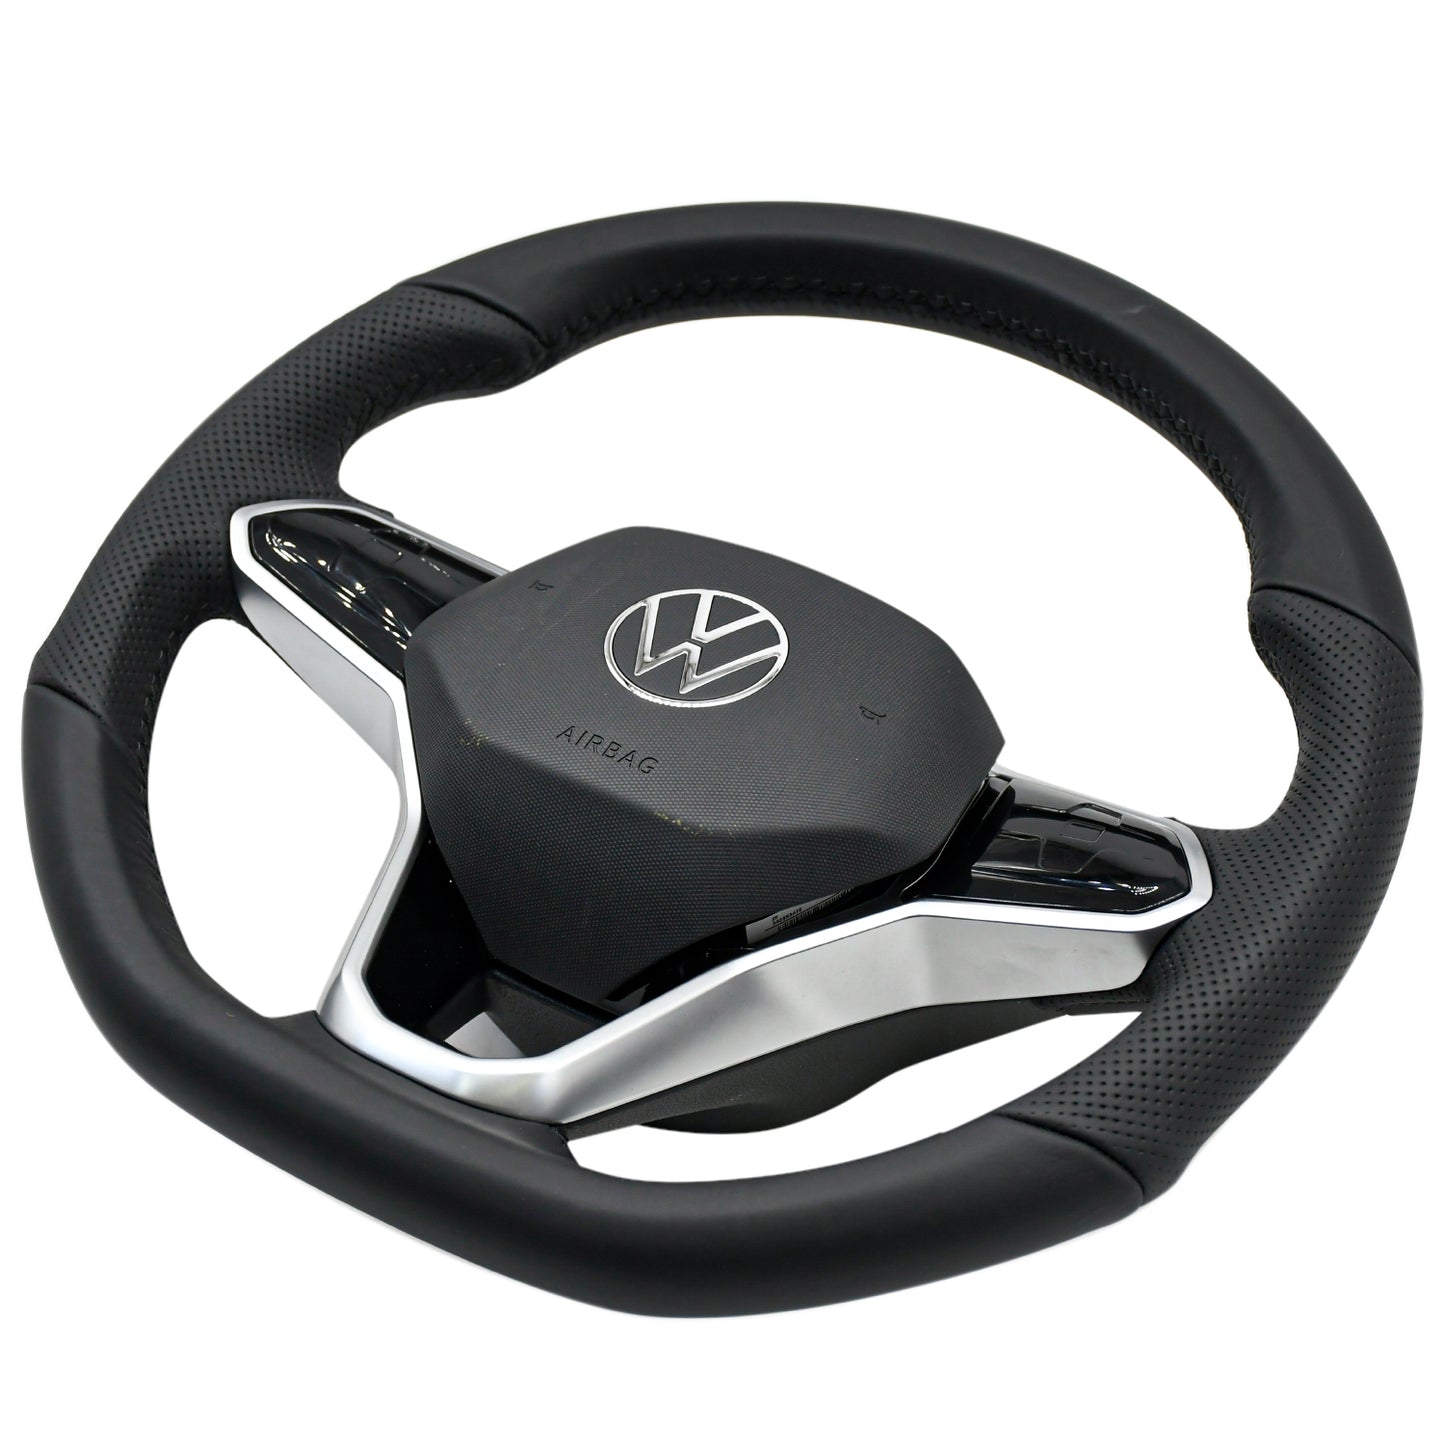 
                  
                    Vw Mqb Steering Wheel
                  
                